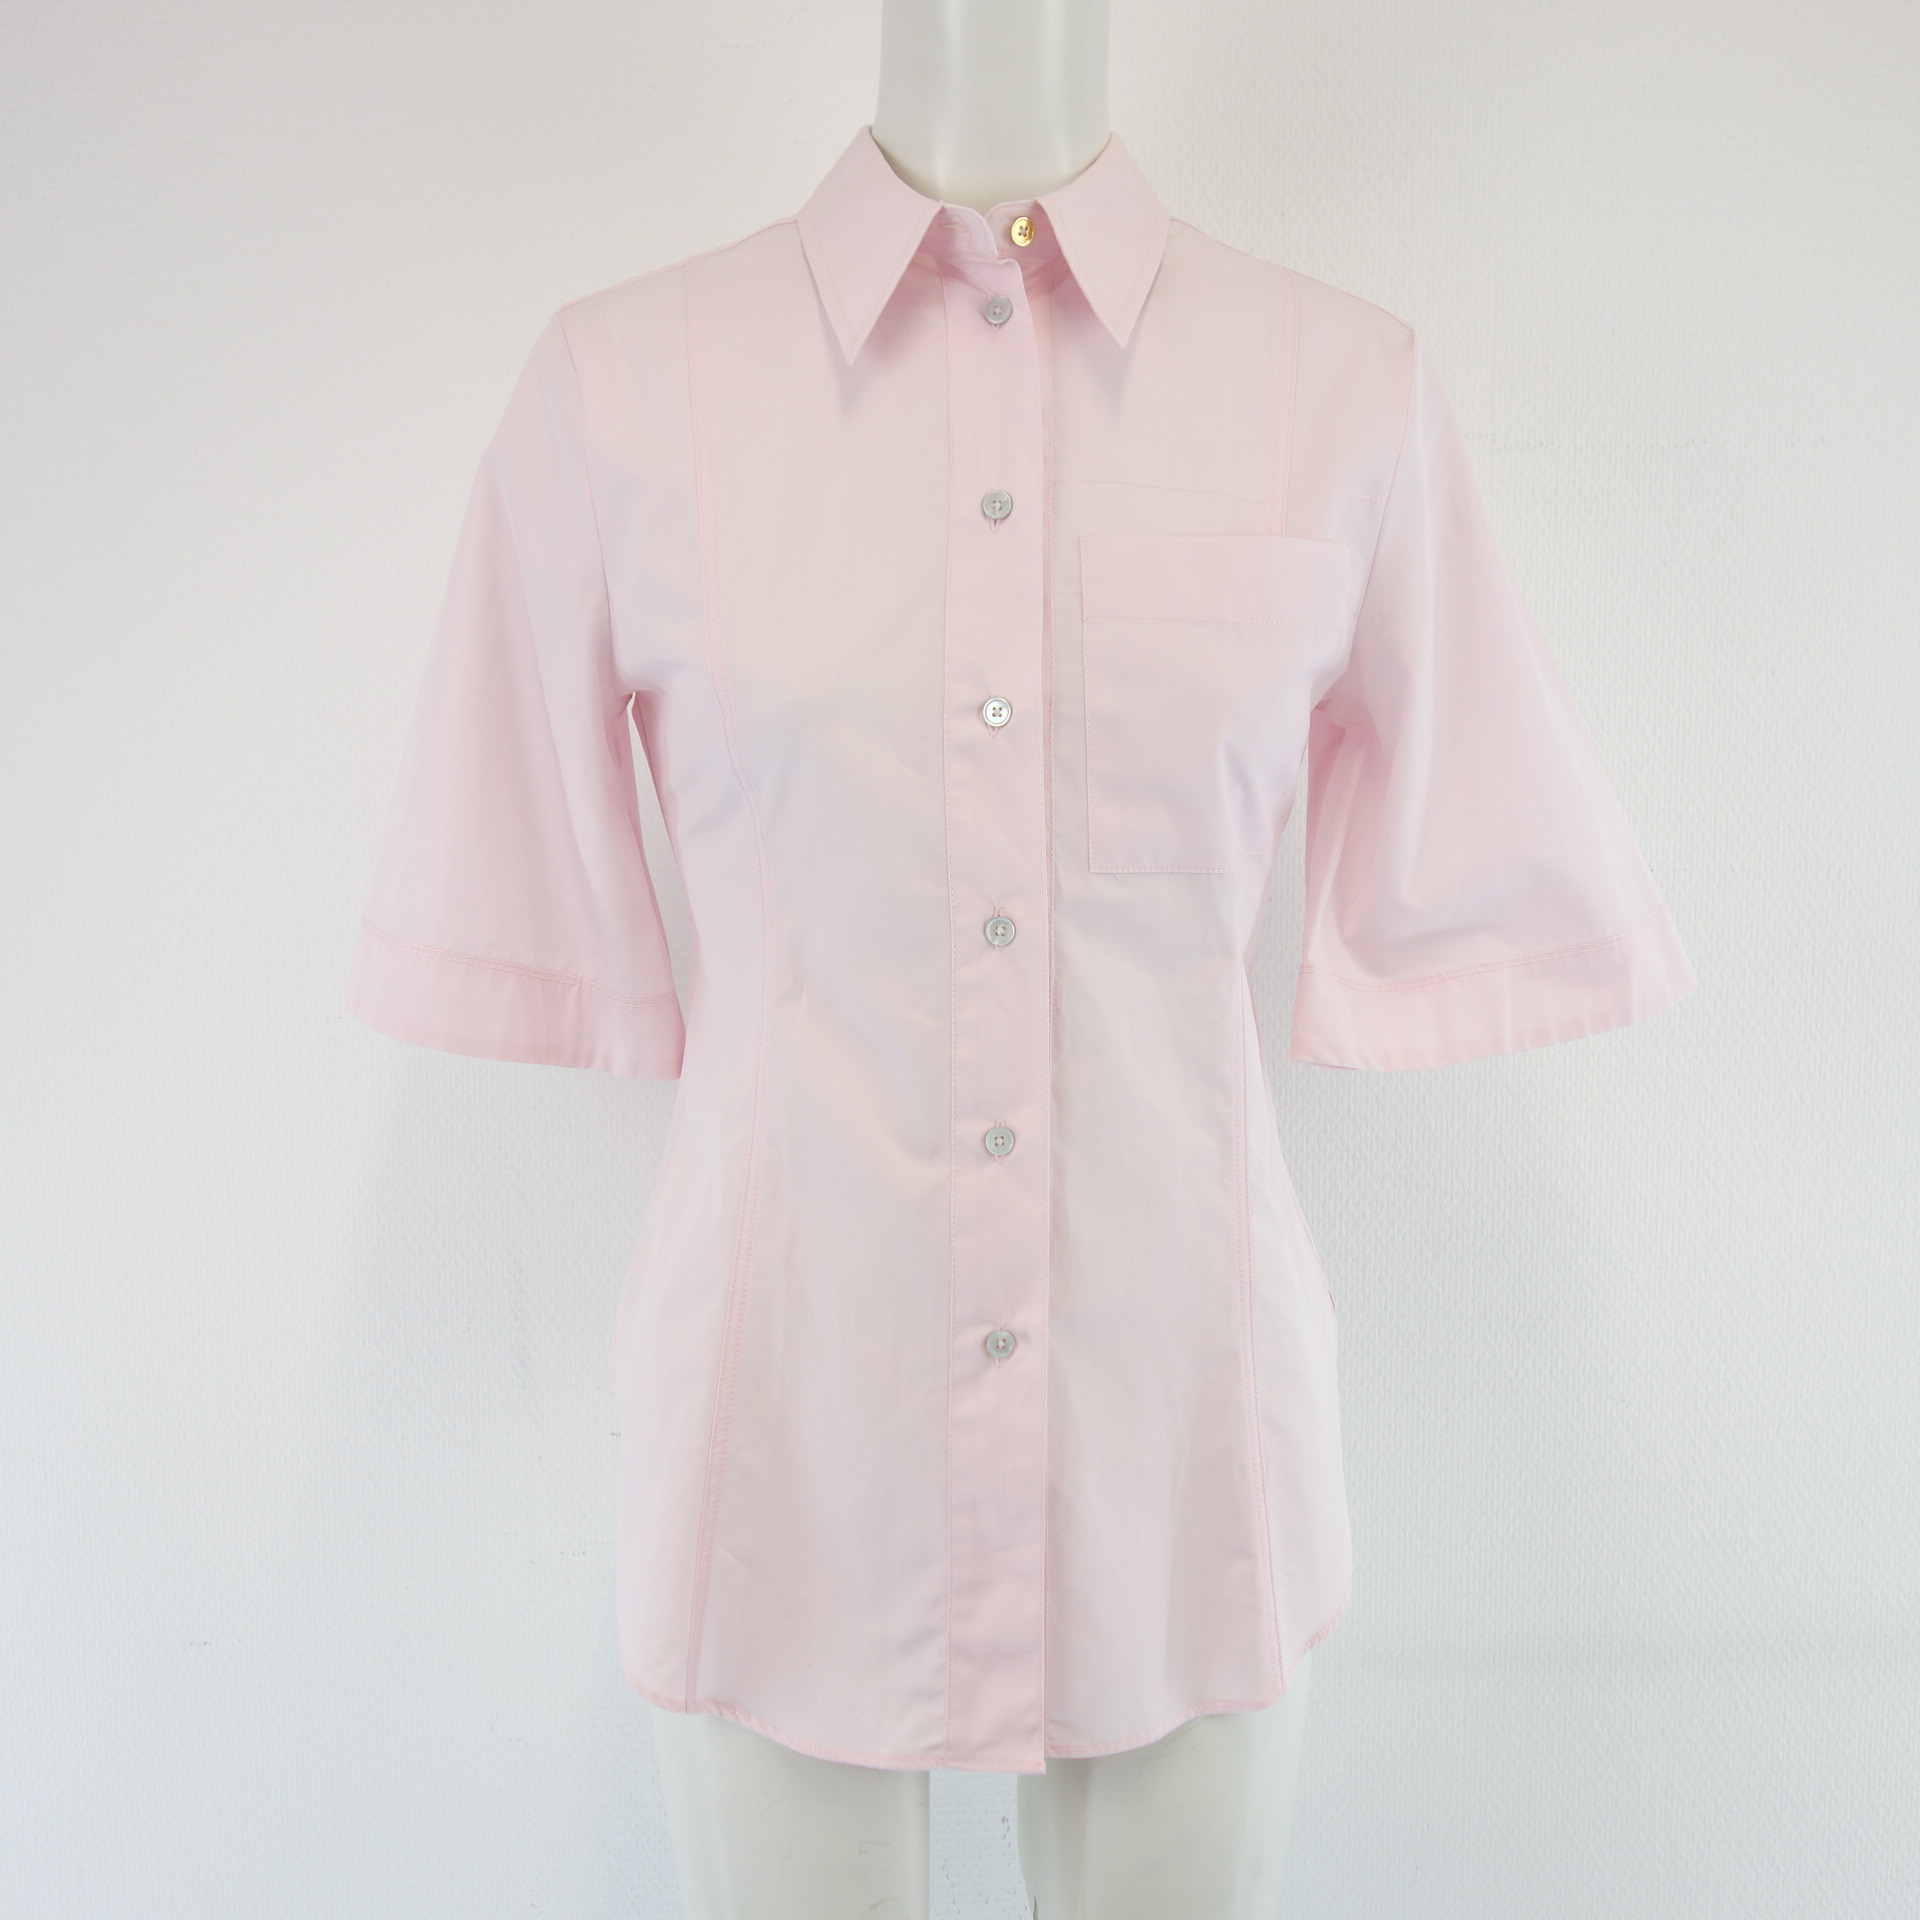 PAUL SMITH Damen Hemd Shirt Tunika Bluse Oberteil Slim 100% Baumwolle Pastell Rosa